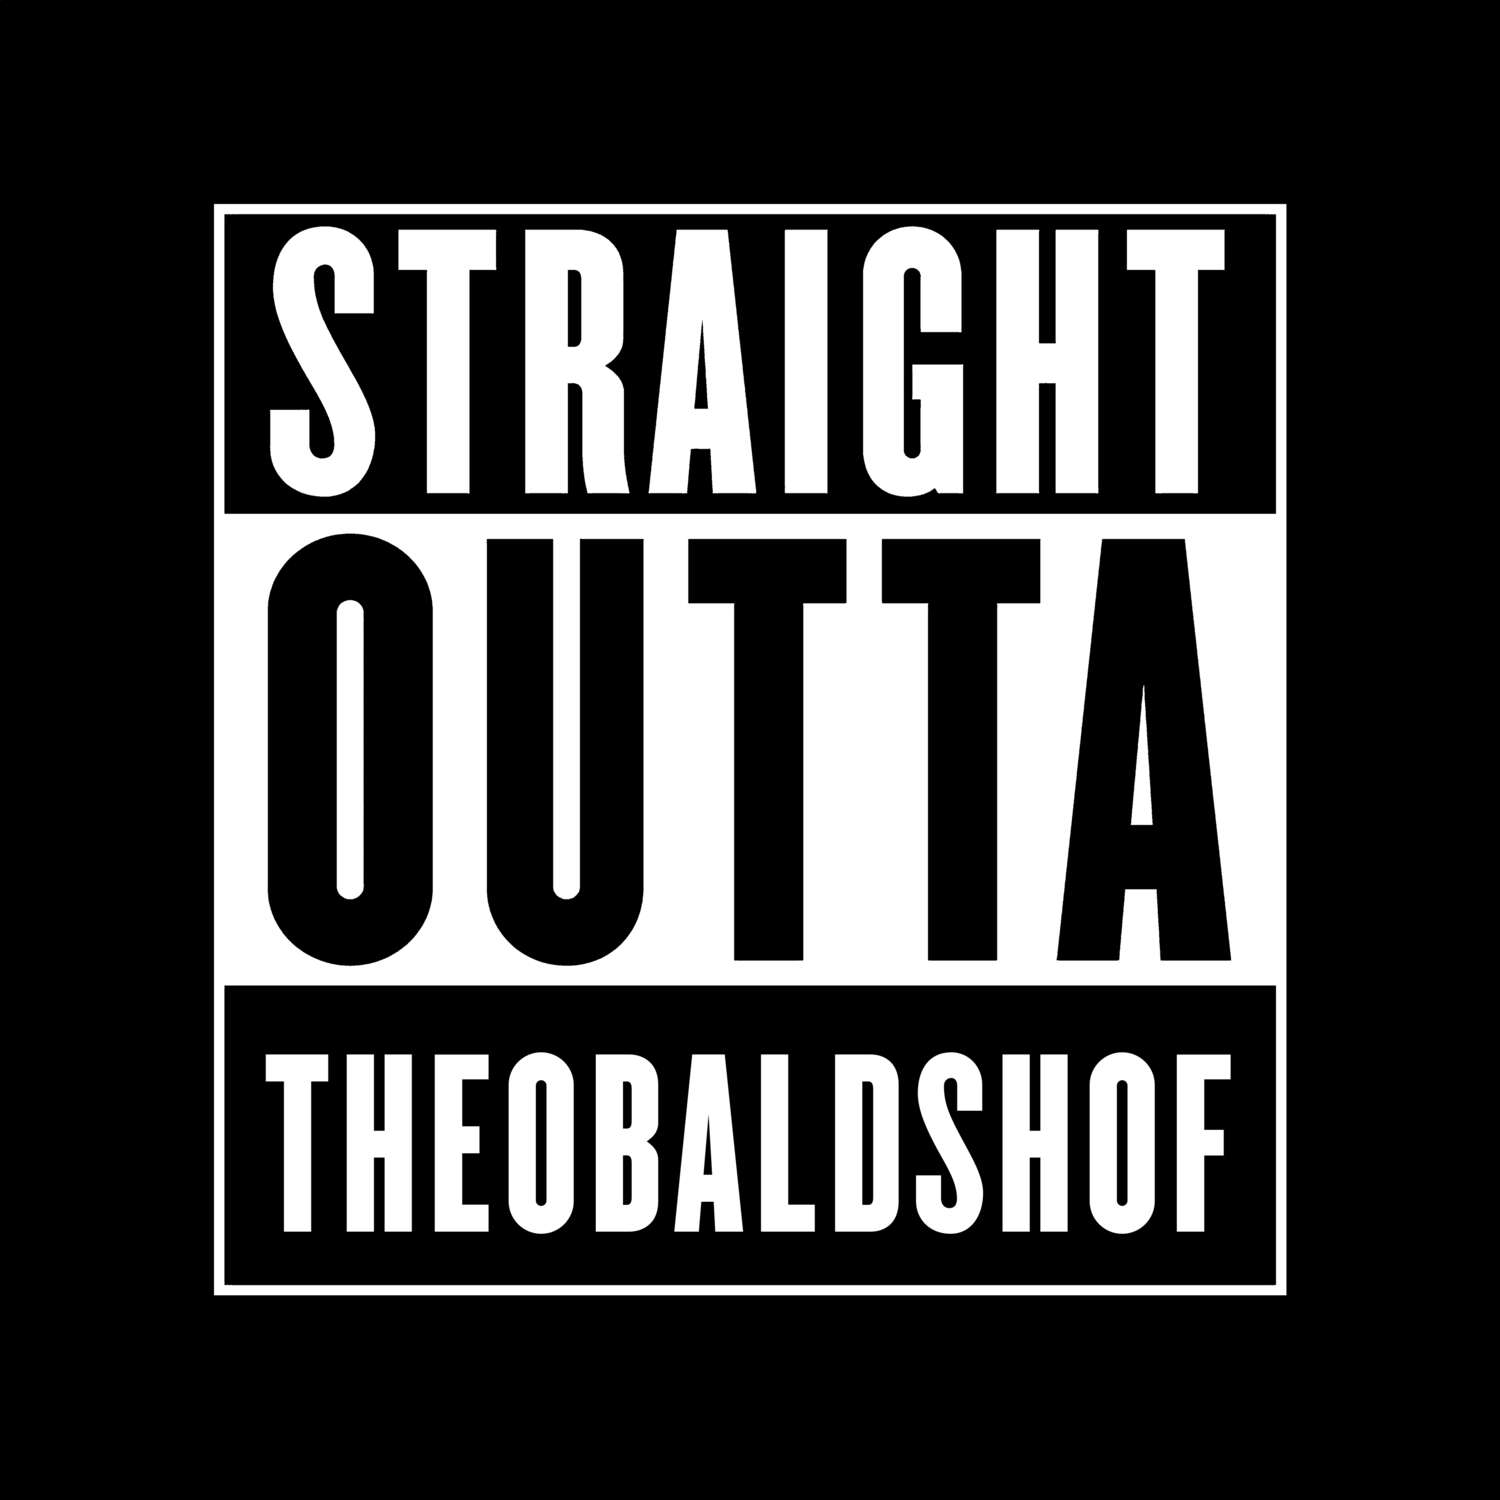 Theobaldshof T-Shirt »Straight Outta«